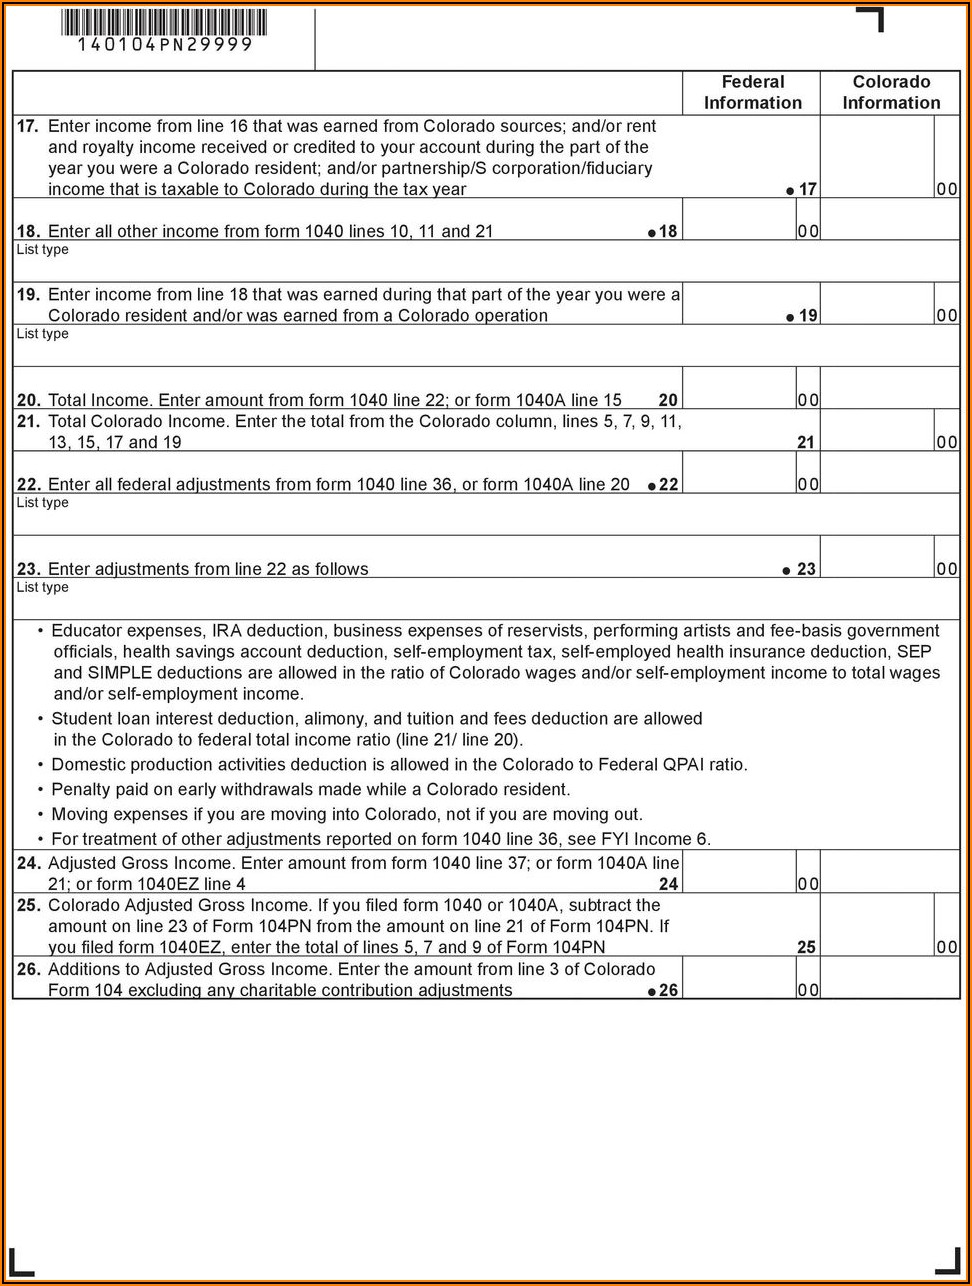 Colorado Form 1099 Filing Requirements